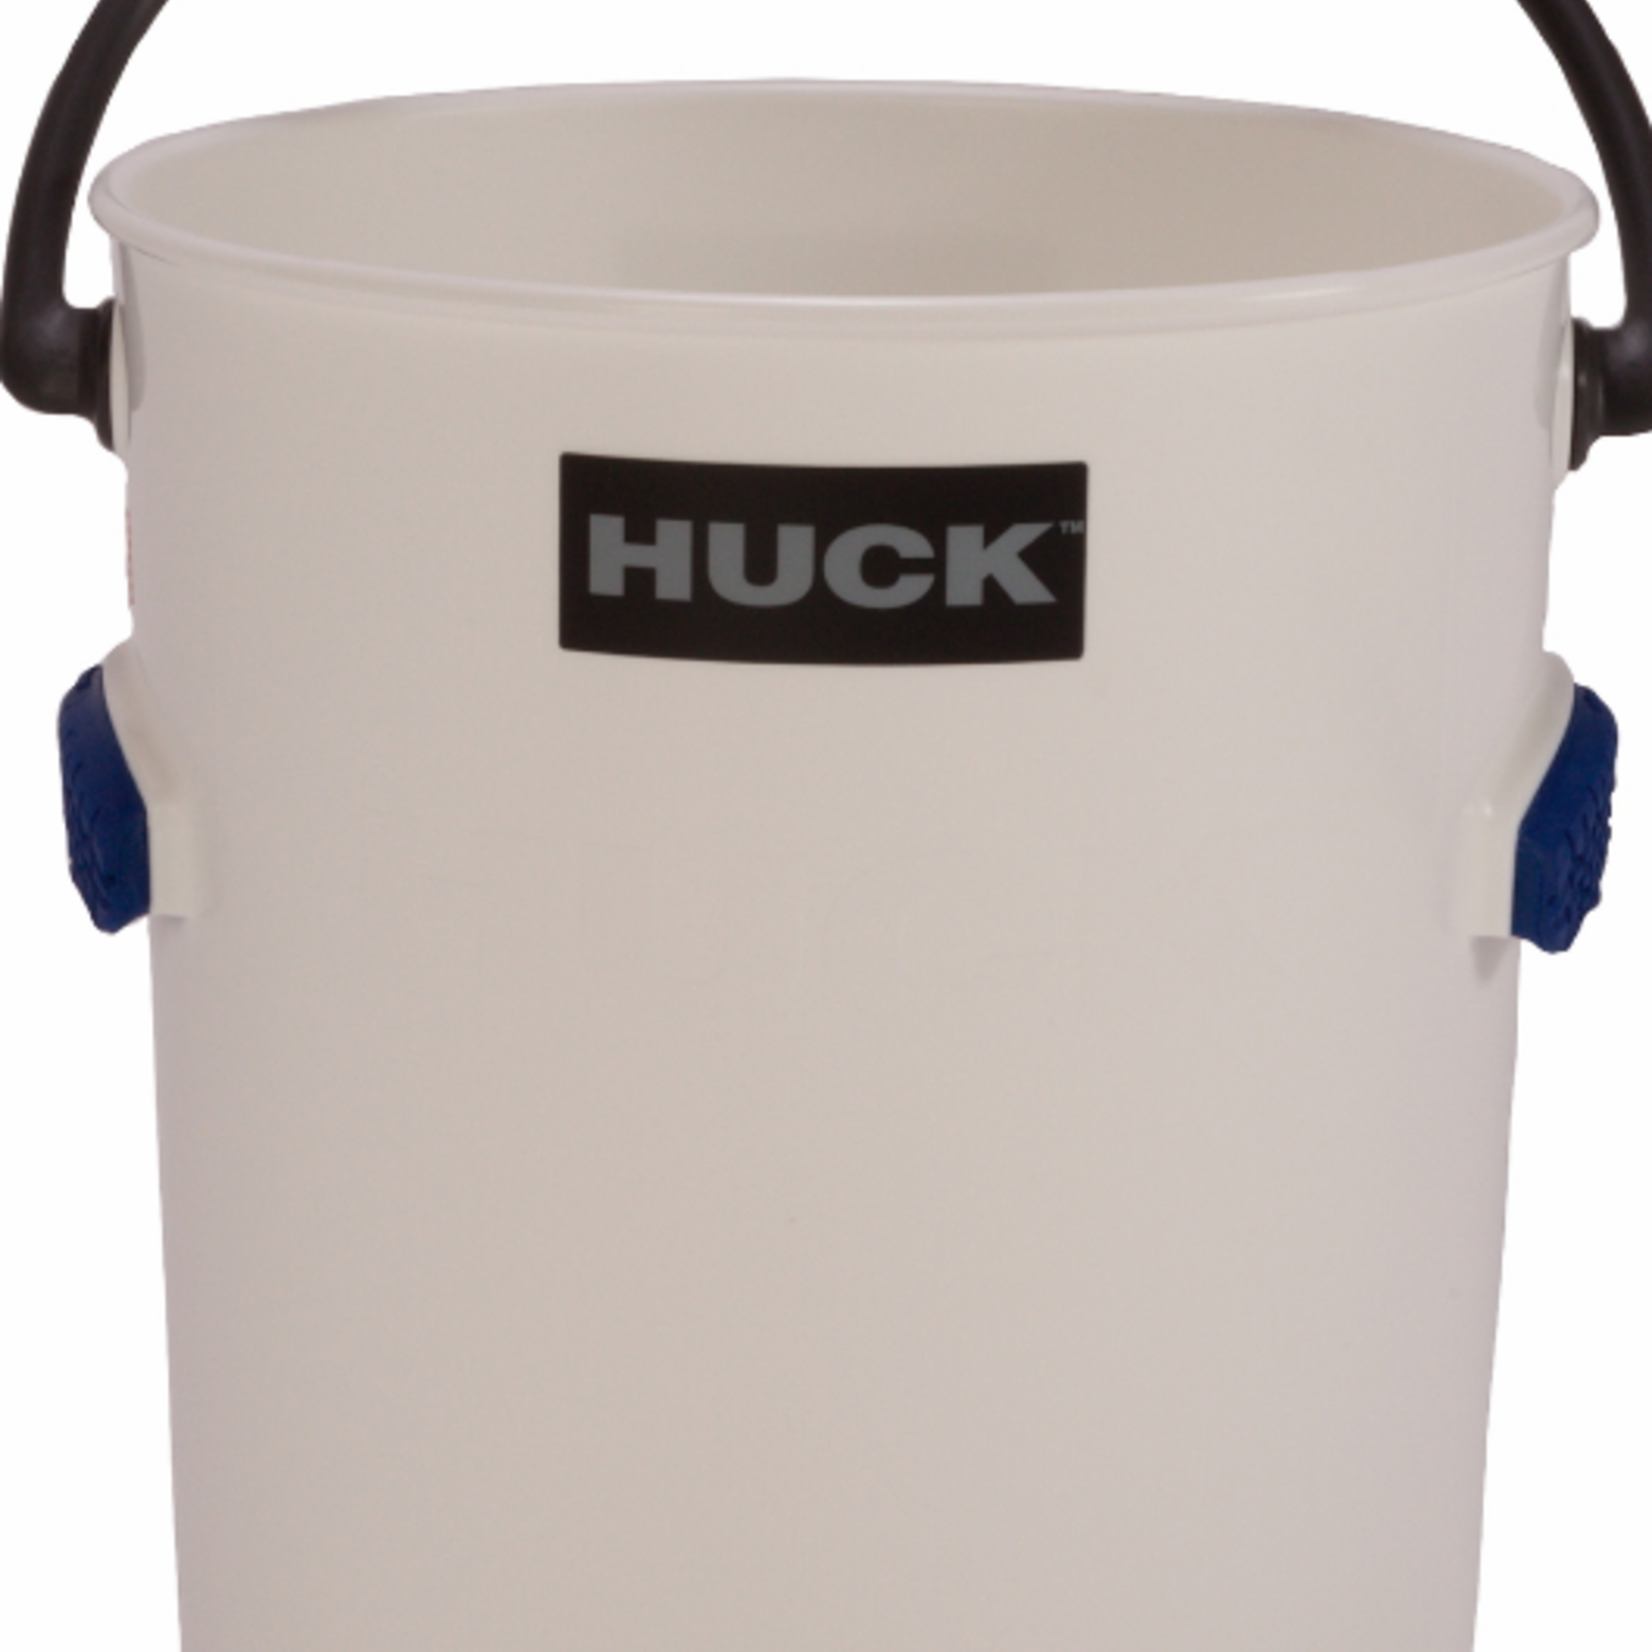 Huck Bucket